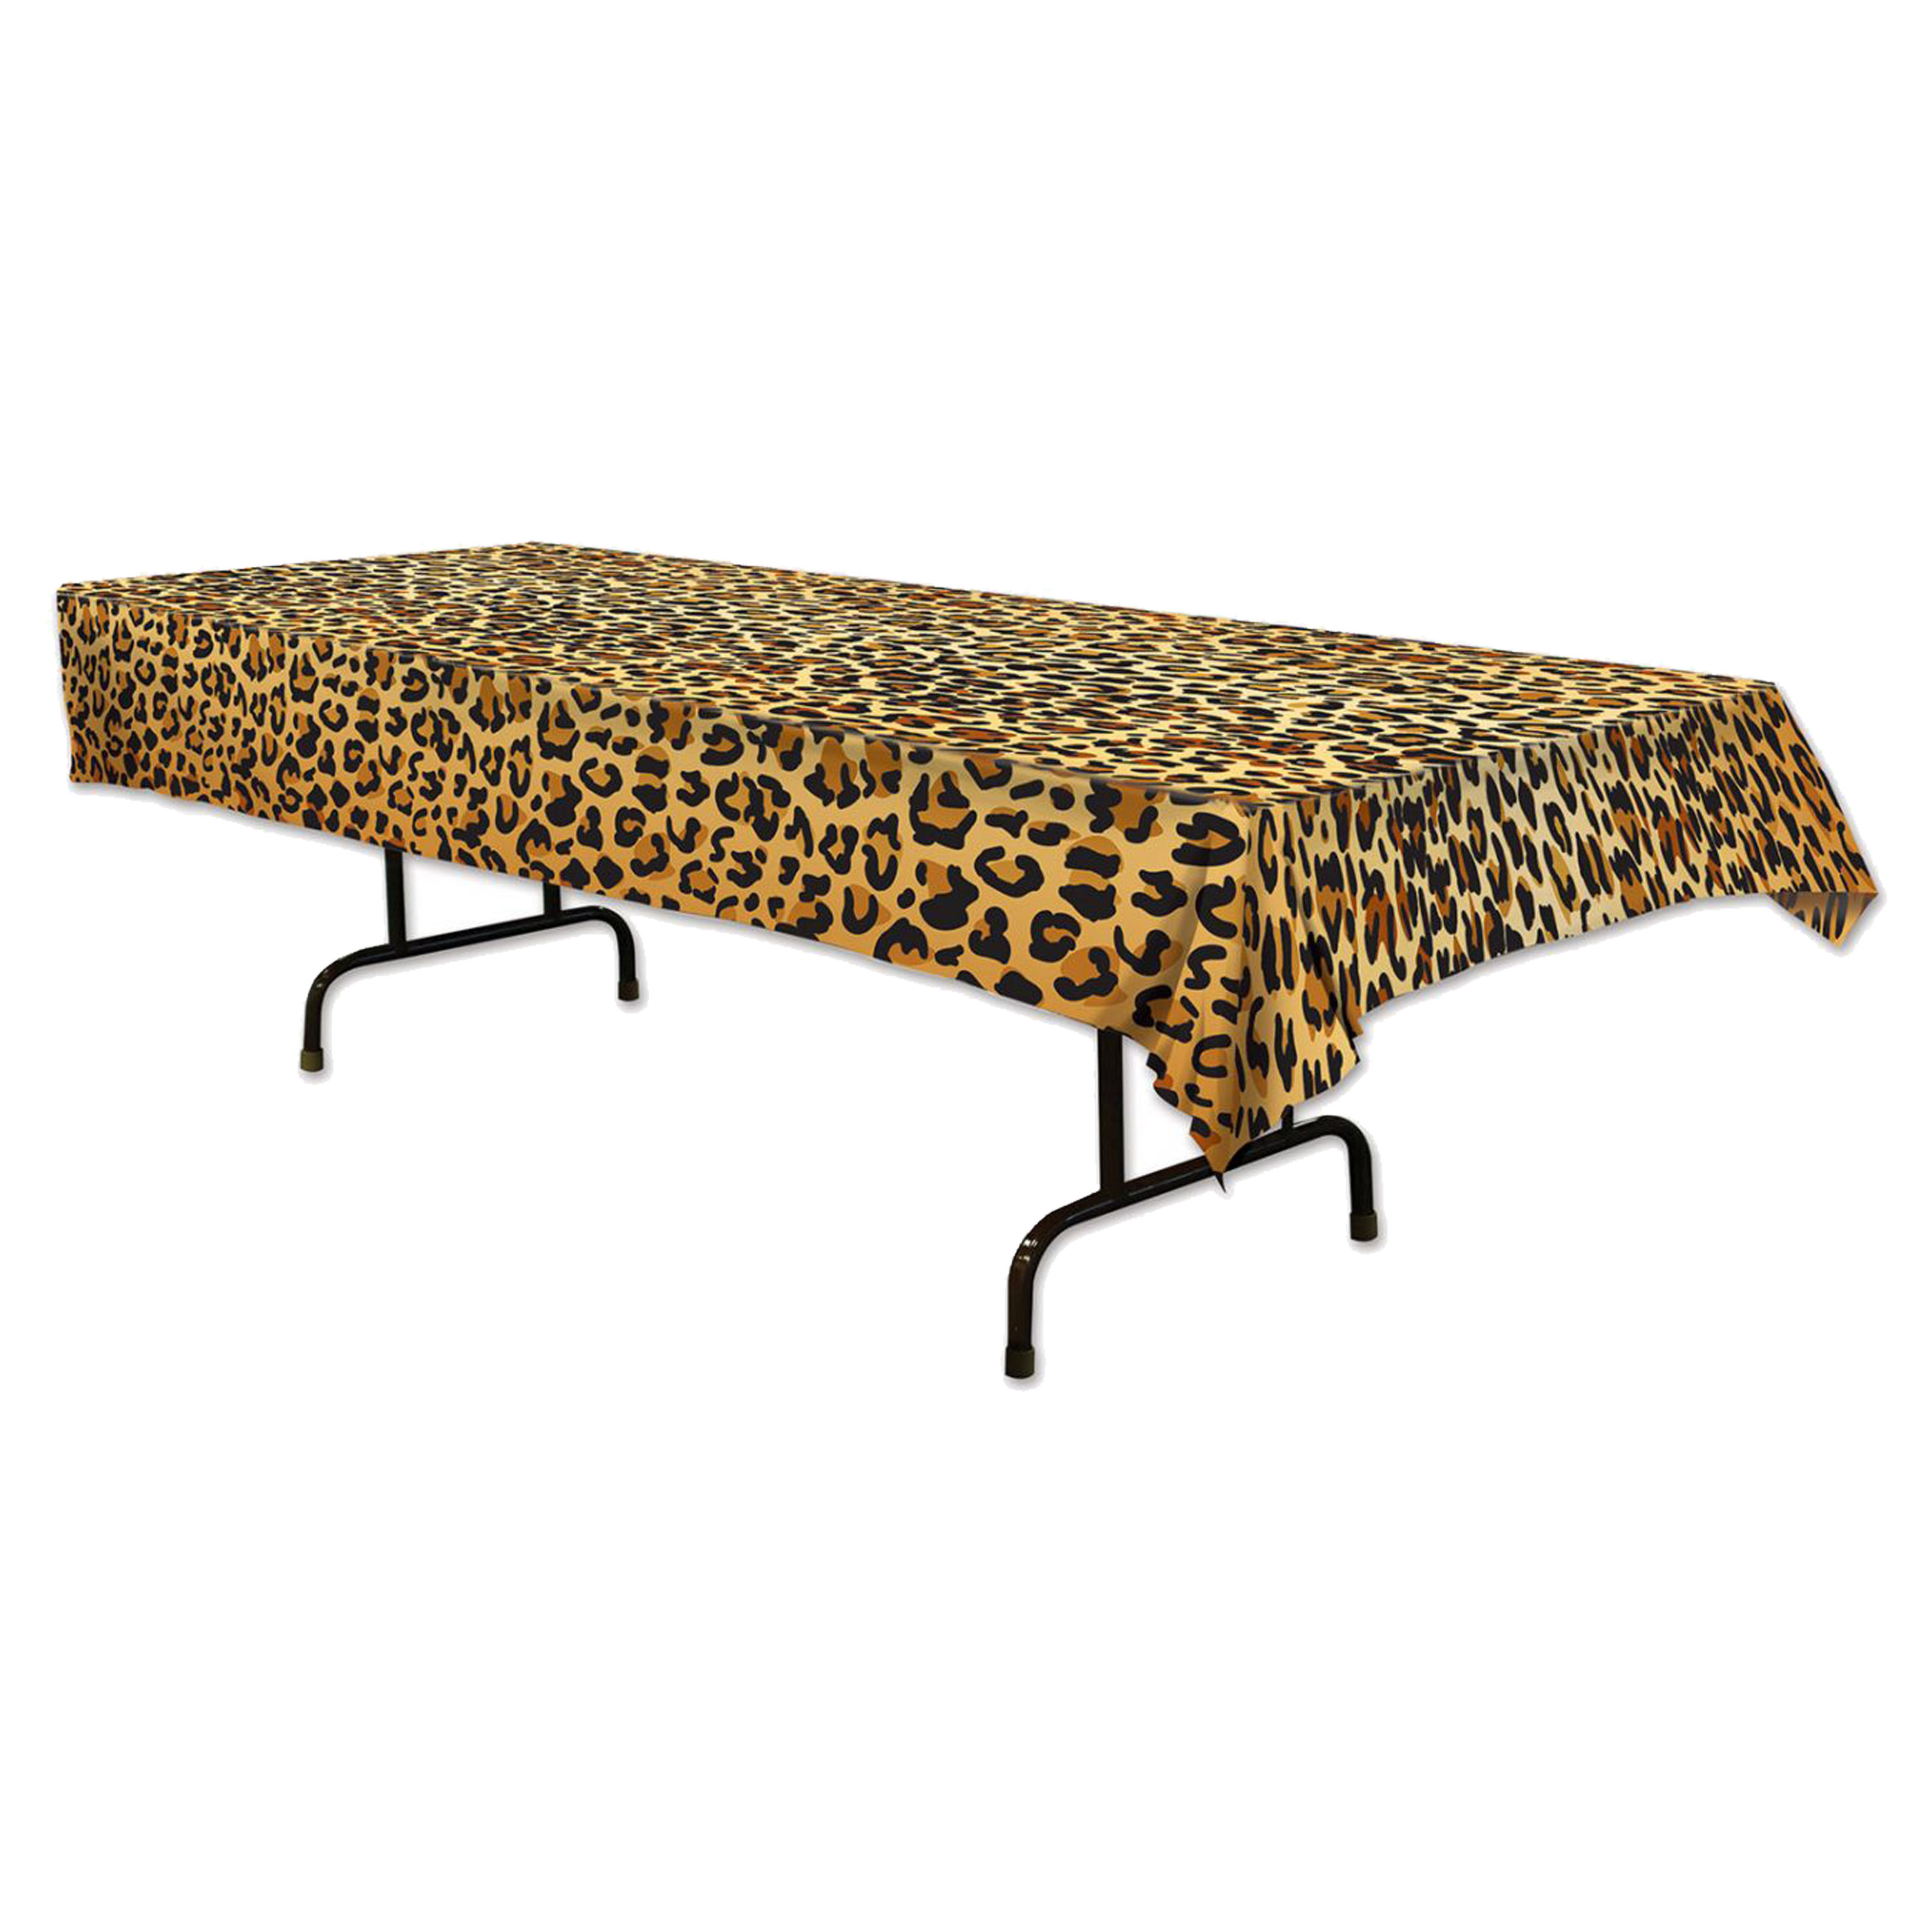 Merkloos Tafellaken/tafelkleed luipaard - 137 x 274 cm - kunststof - Jungle/dieren thema -